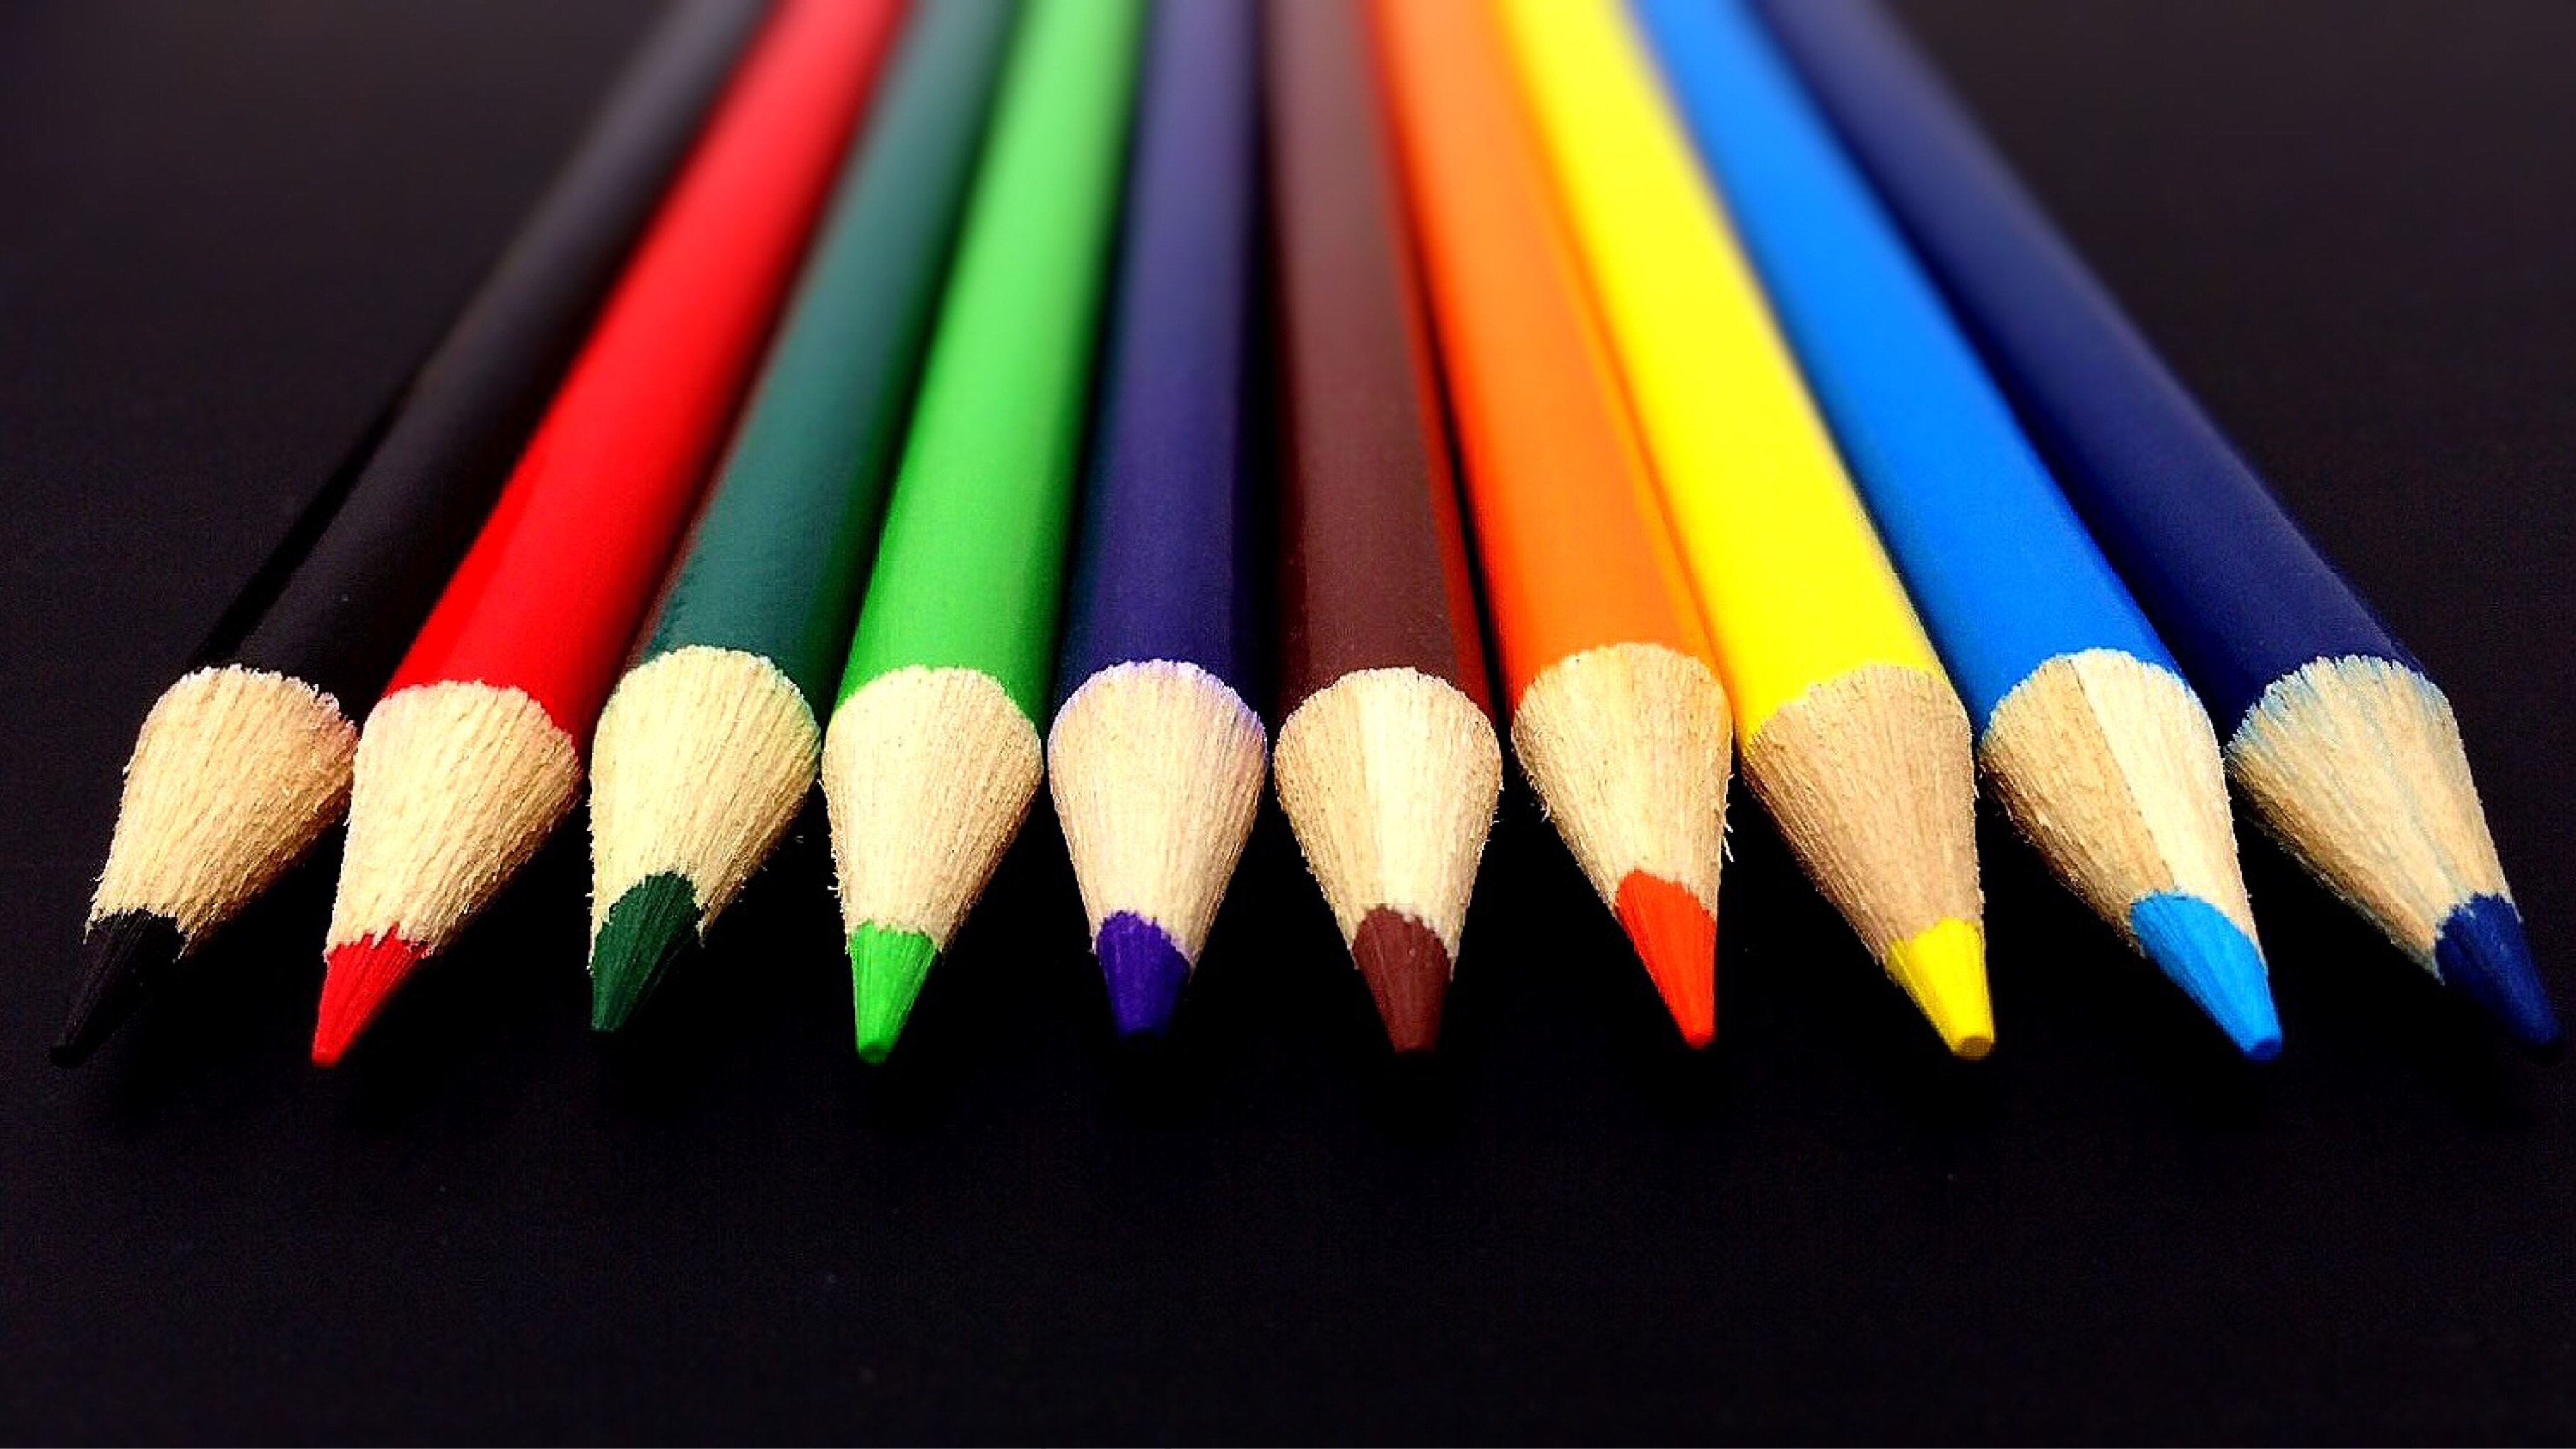 Colors, Supply, Rainbow, Pencils, School, multi colored, colored pencil